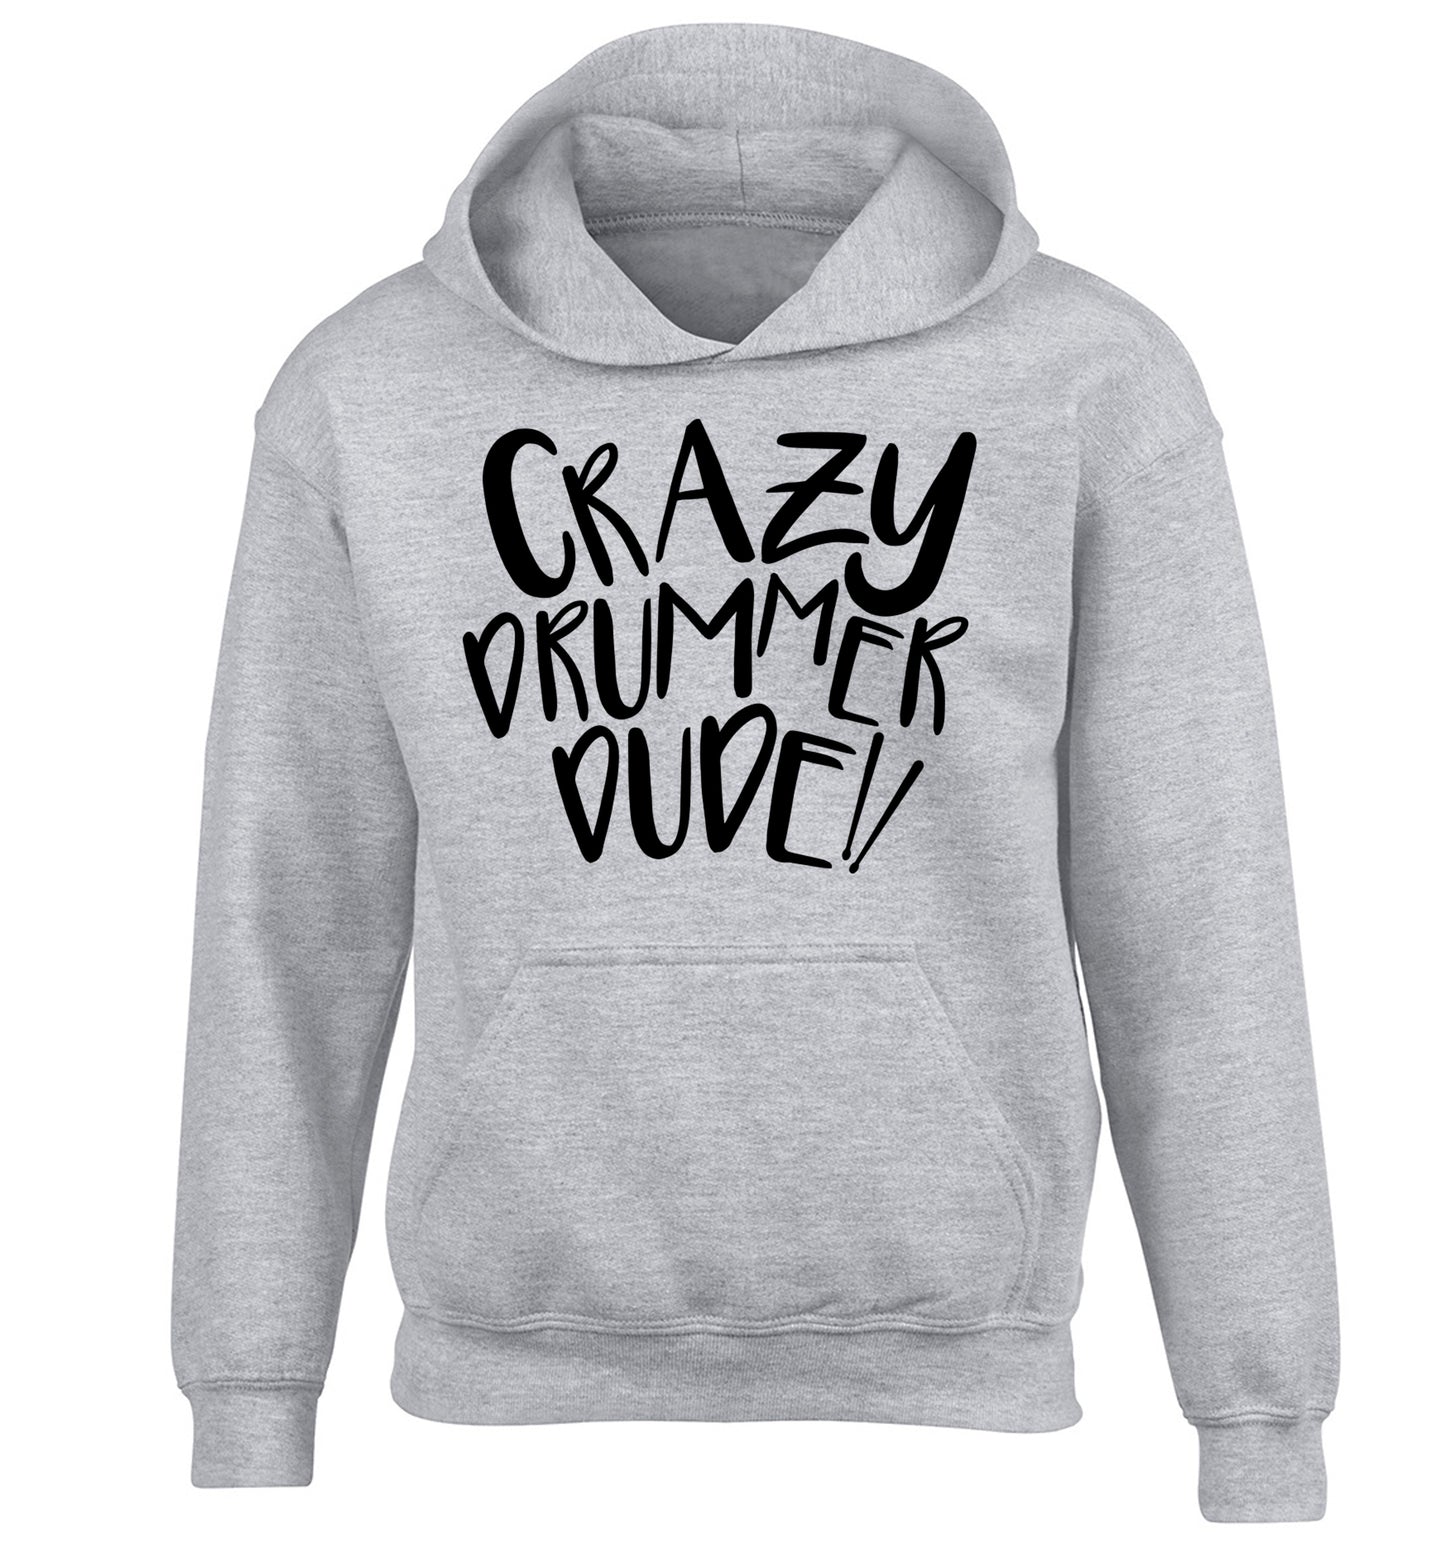 Crazy drummer dude children's grey hoodie 12-14 Years